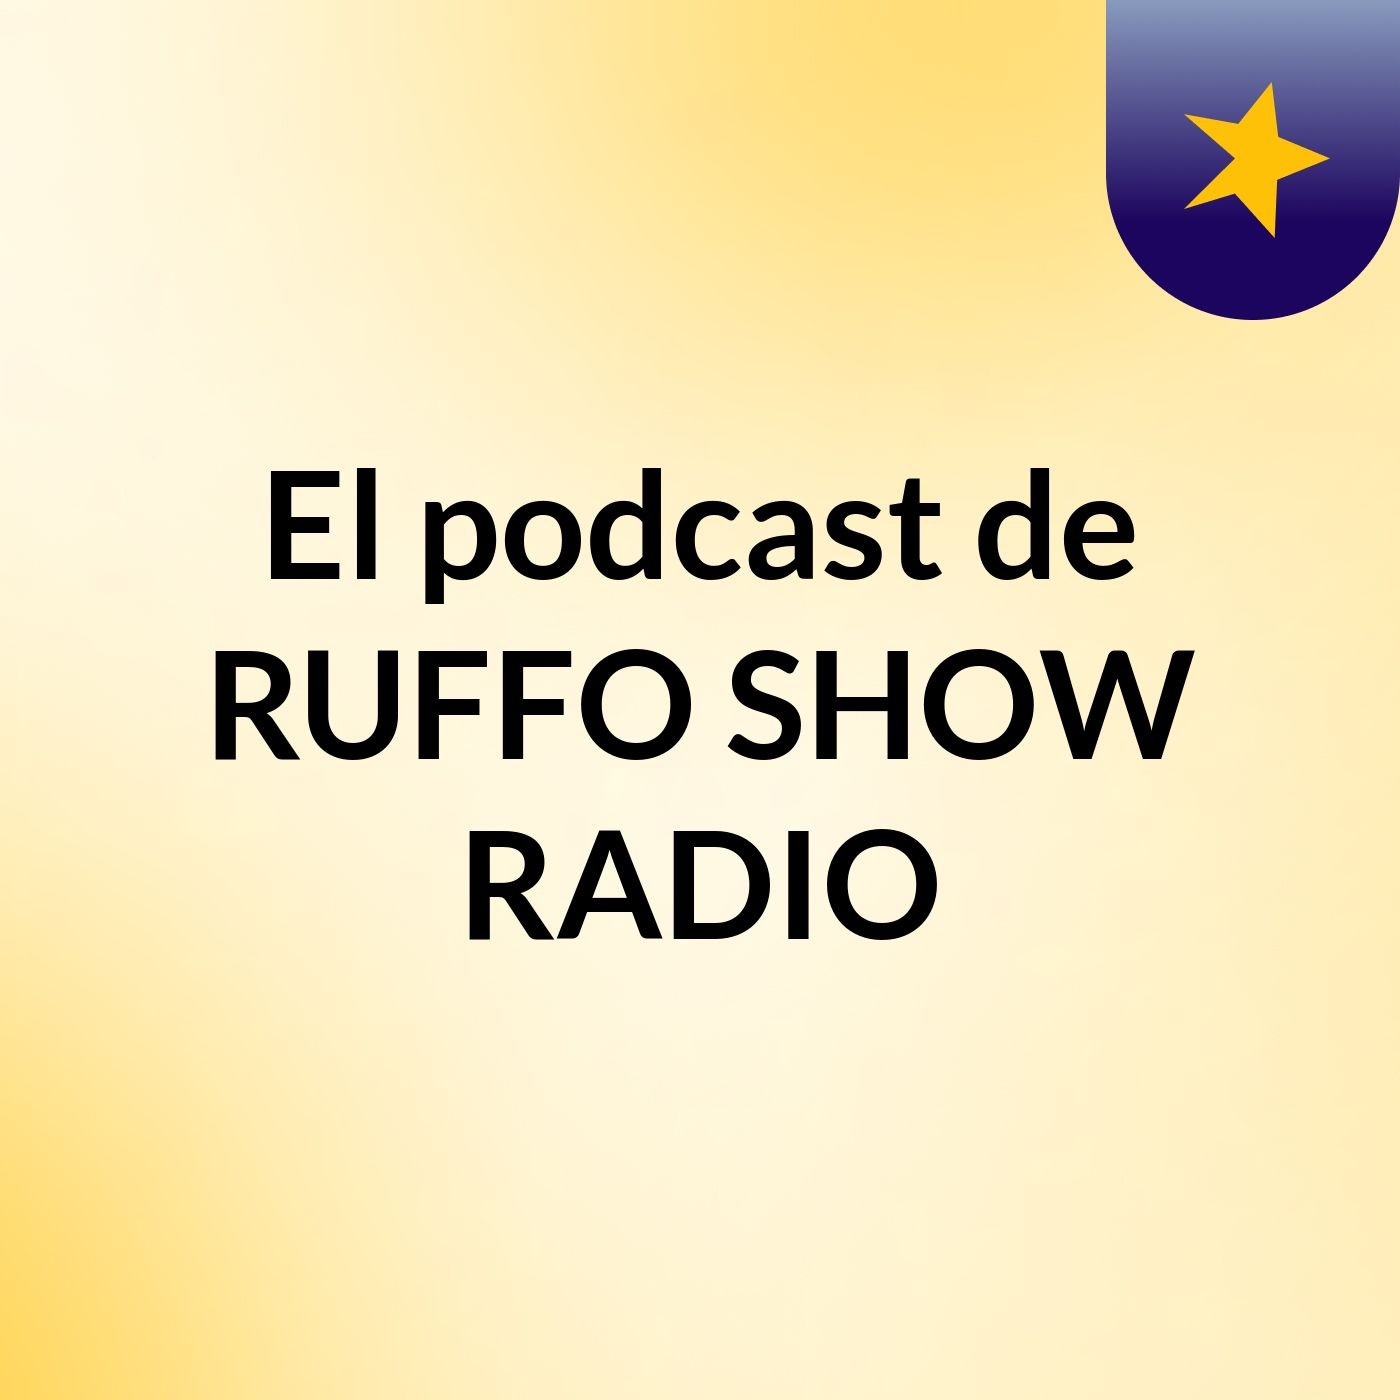 El podcast de RUFFO SHOW RADIO